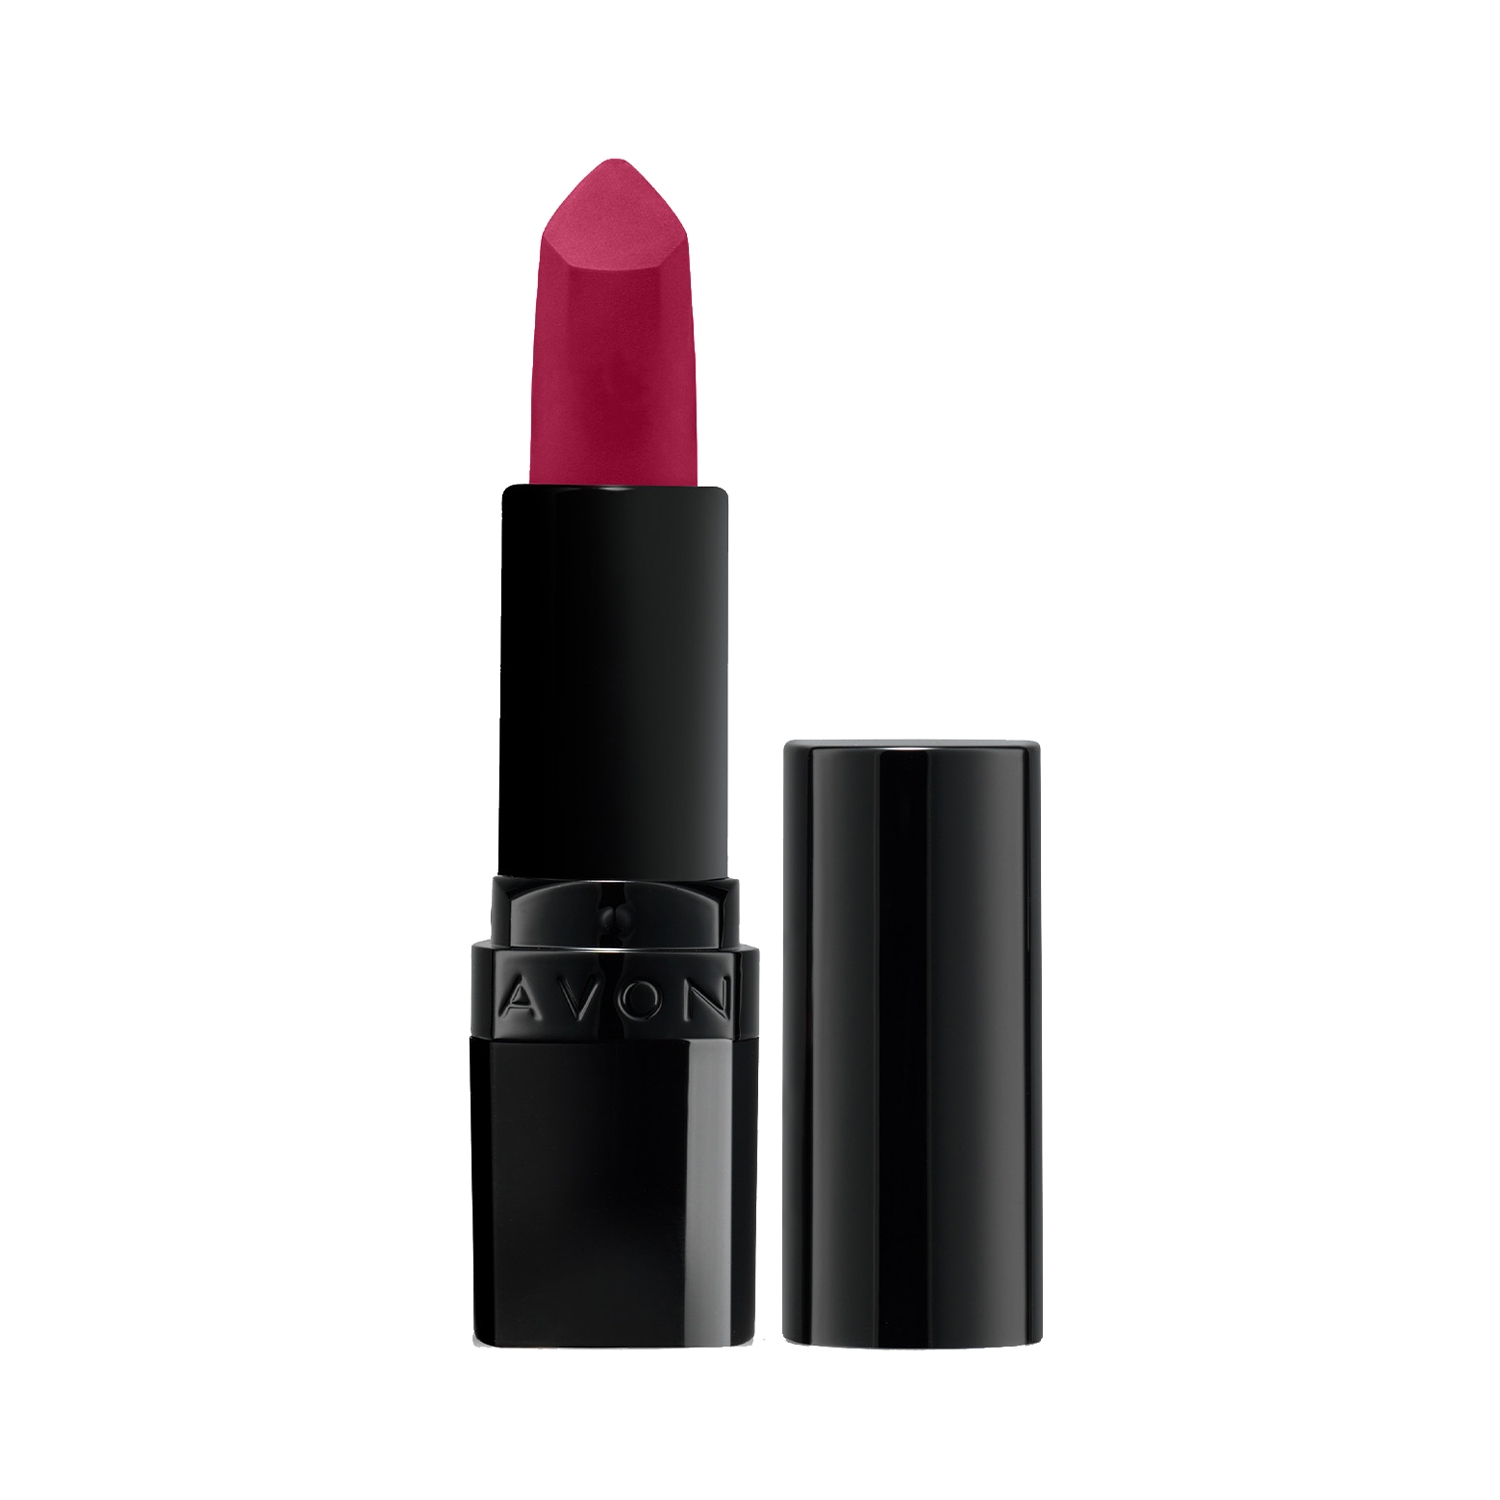 Avon | Avon Ultra Perfectly Matte Lipstick - Adorning Love (4g)